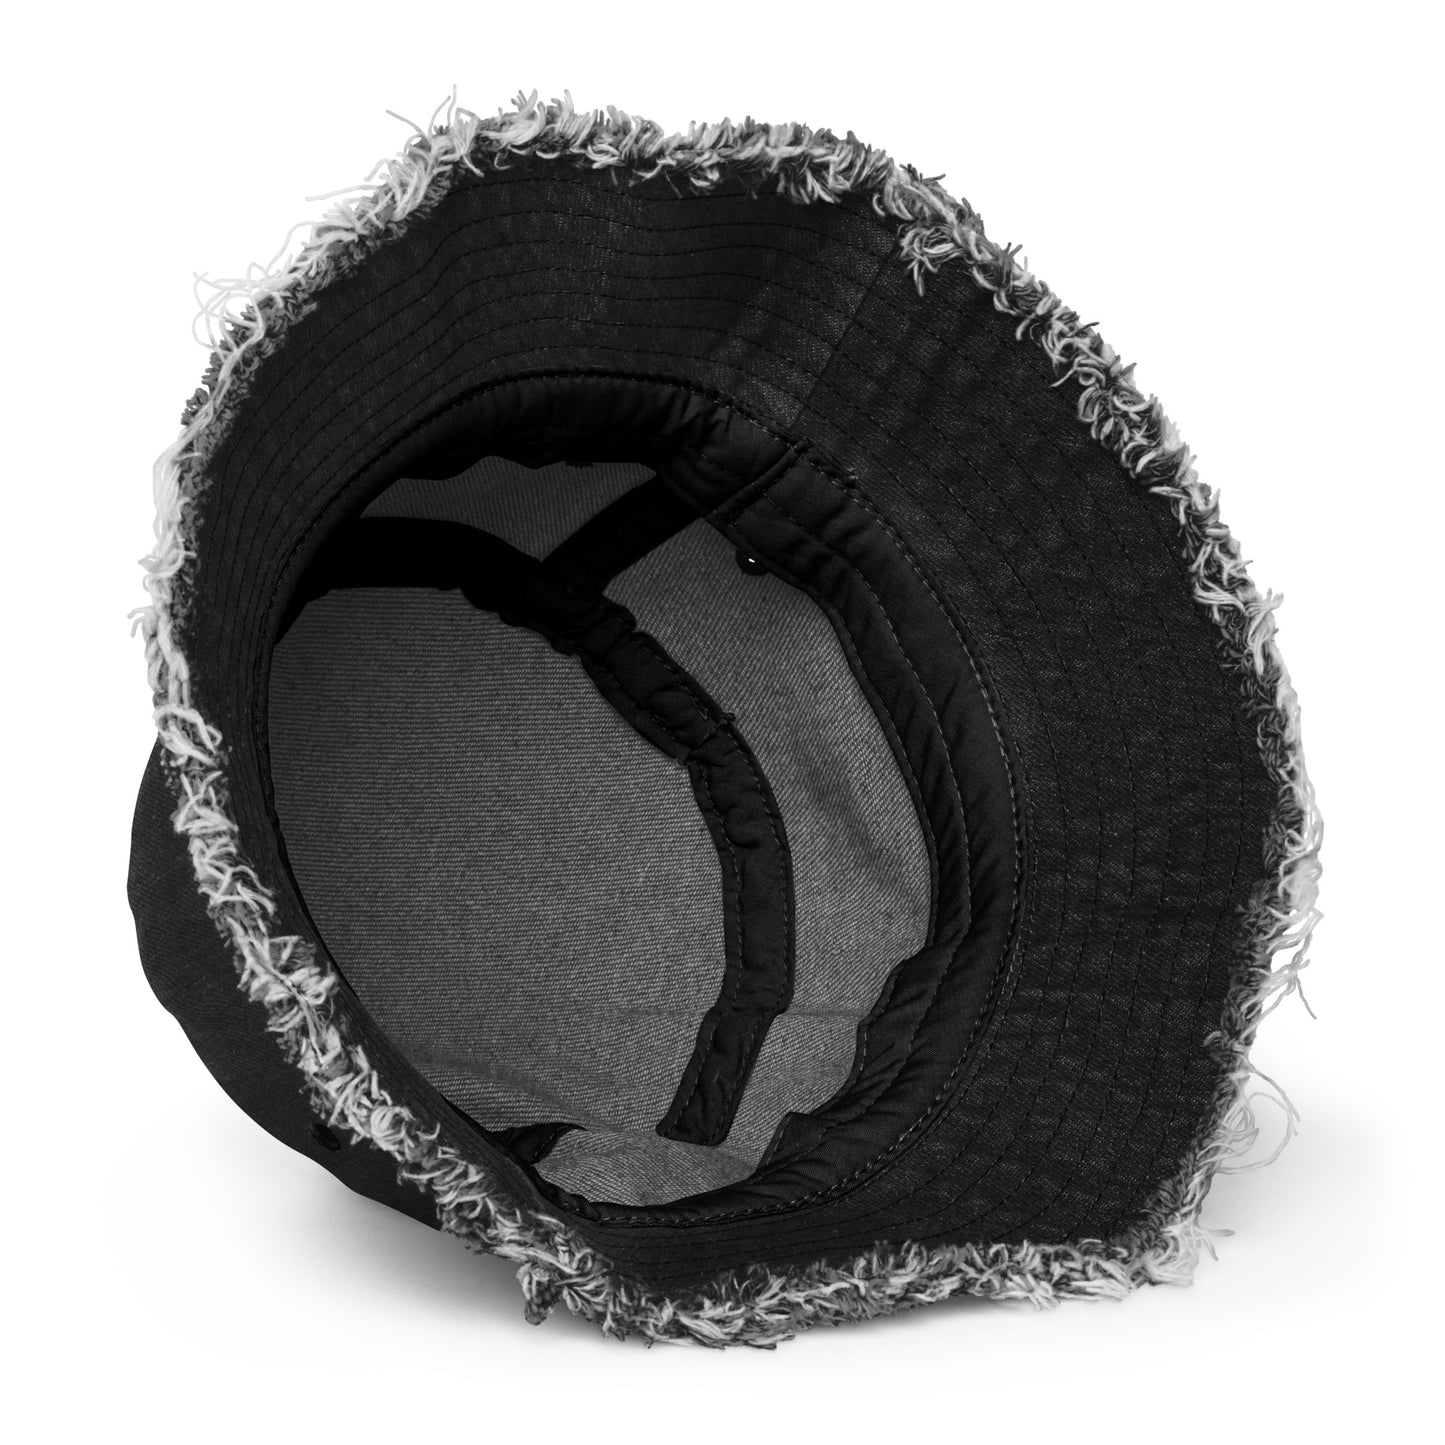 Printful Denim Bucket Hat